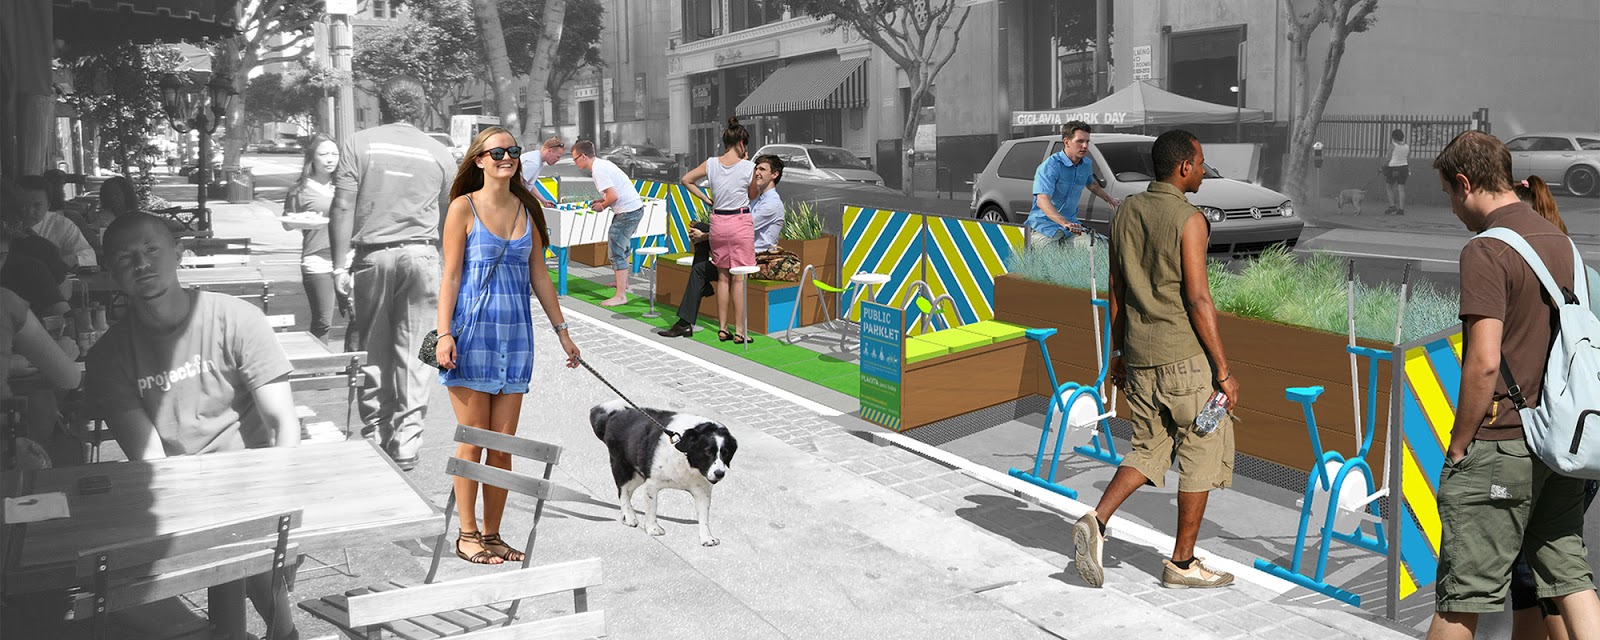 Study: Downtown L.A. Parklets Improve Community, Quality of Life